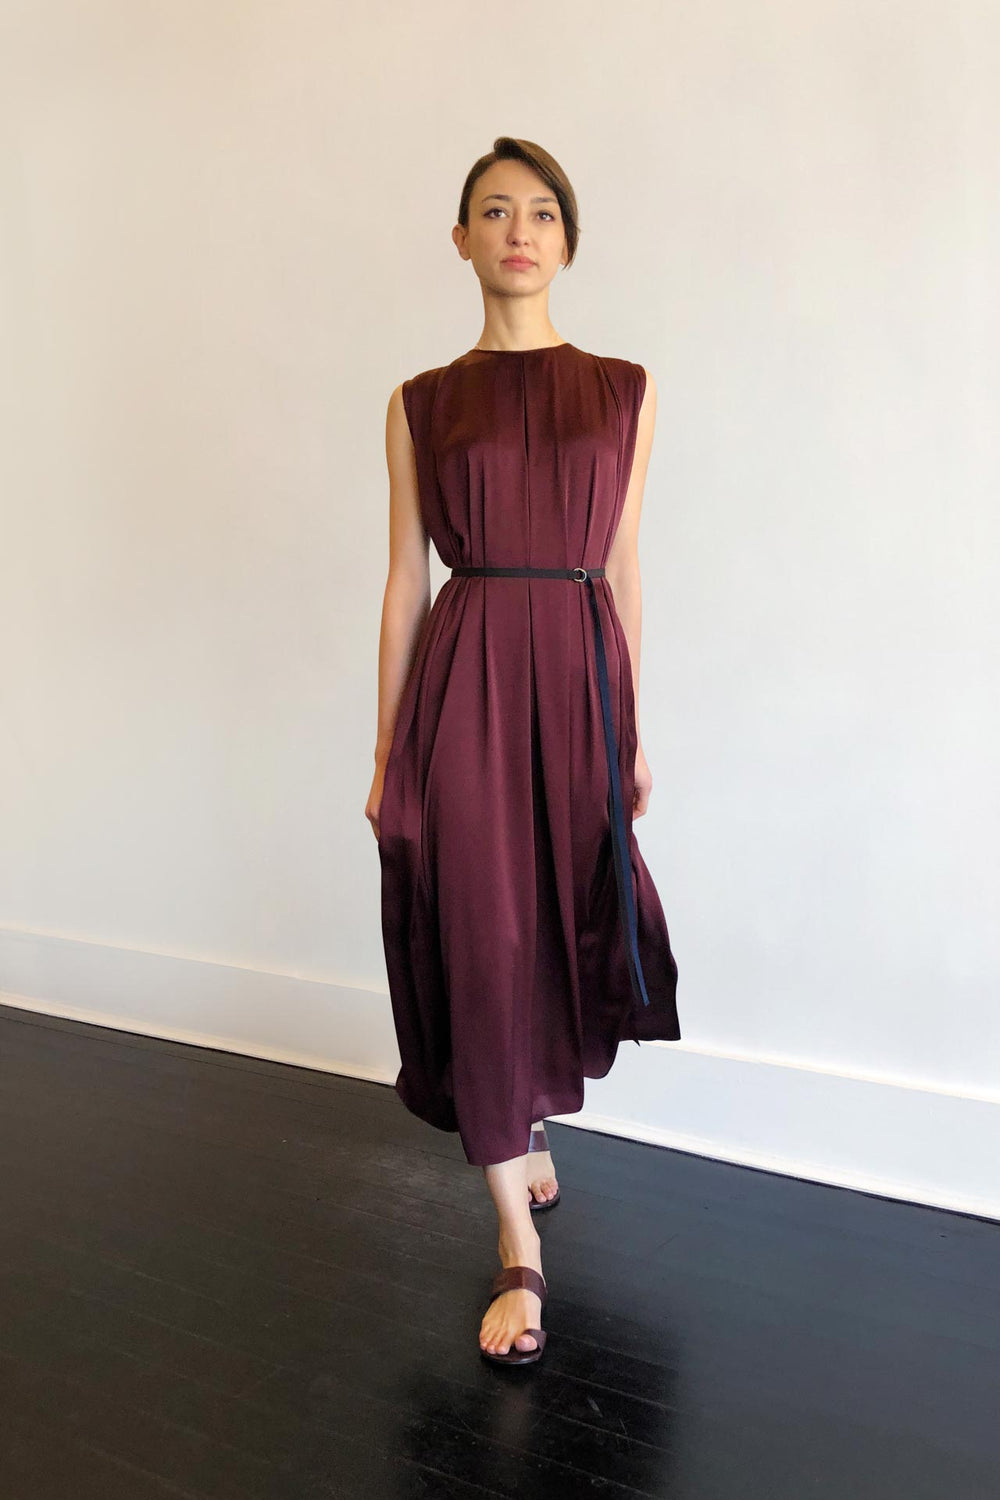 Fashion Designer CARL KAPP collection | Palm Onesize Fits All cocktail dress Maroon | Sydney Australia